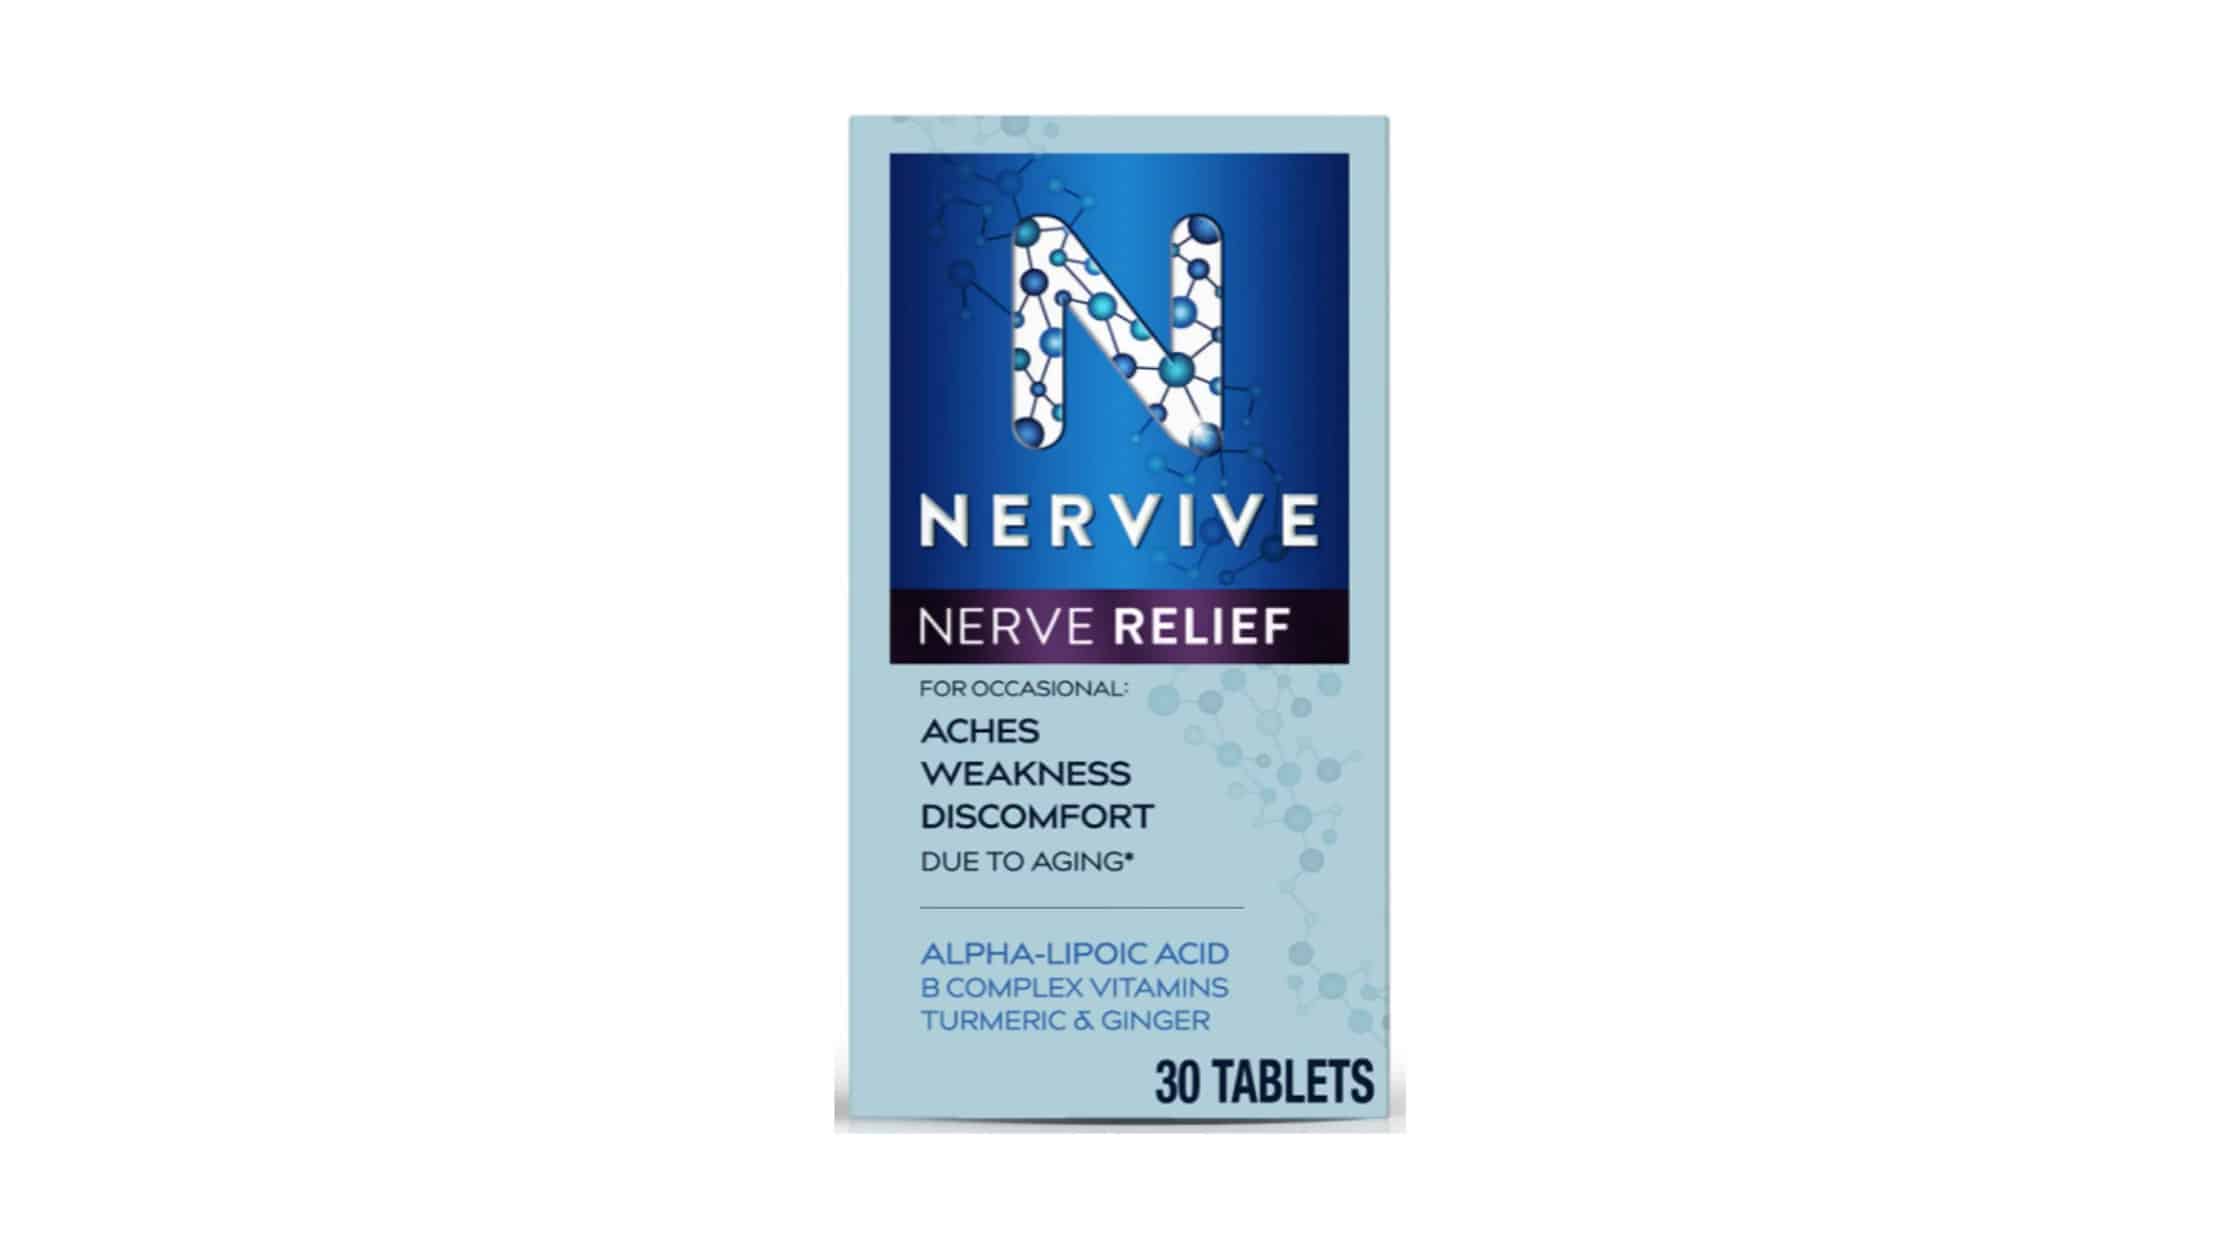 Nervive Nerve Relief Reviews